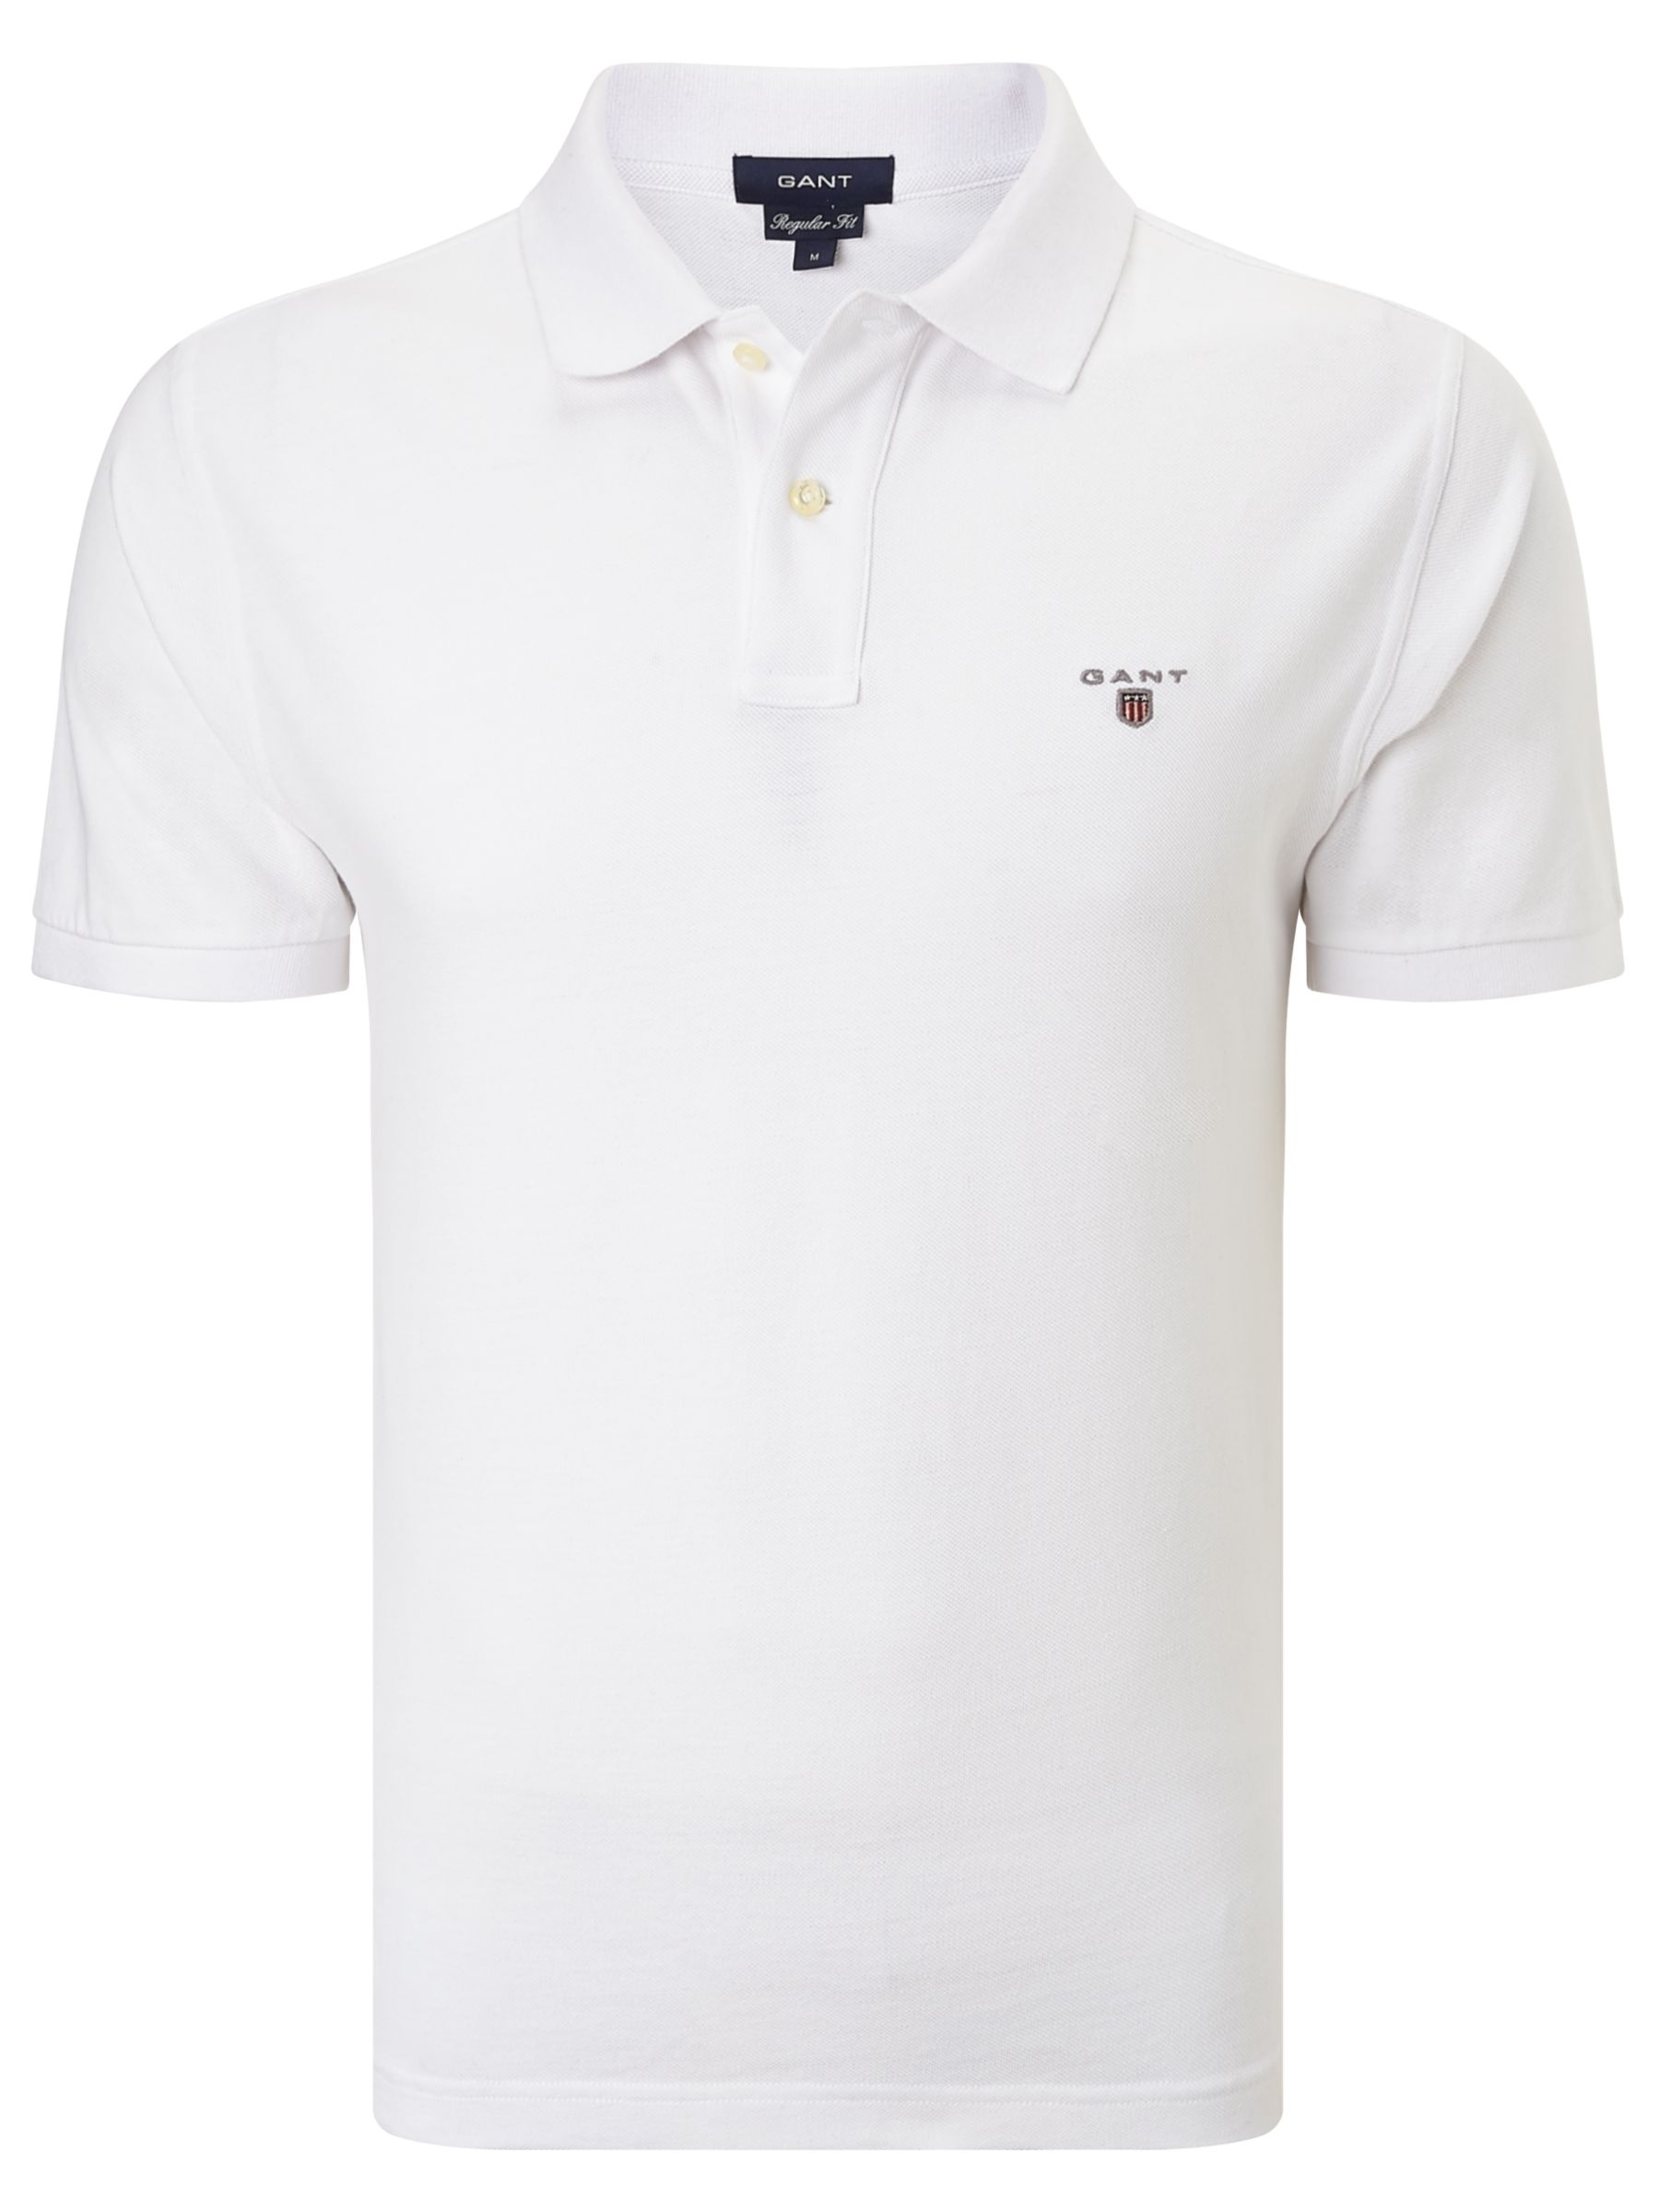 GANT Solid Pique Polo Shirt, White at John Lewis & Partners